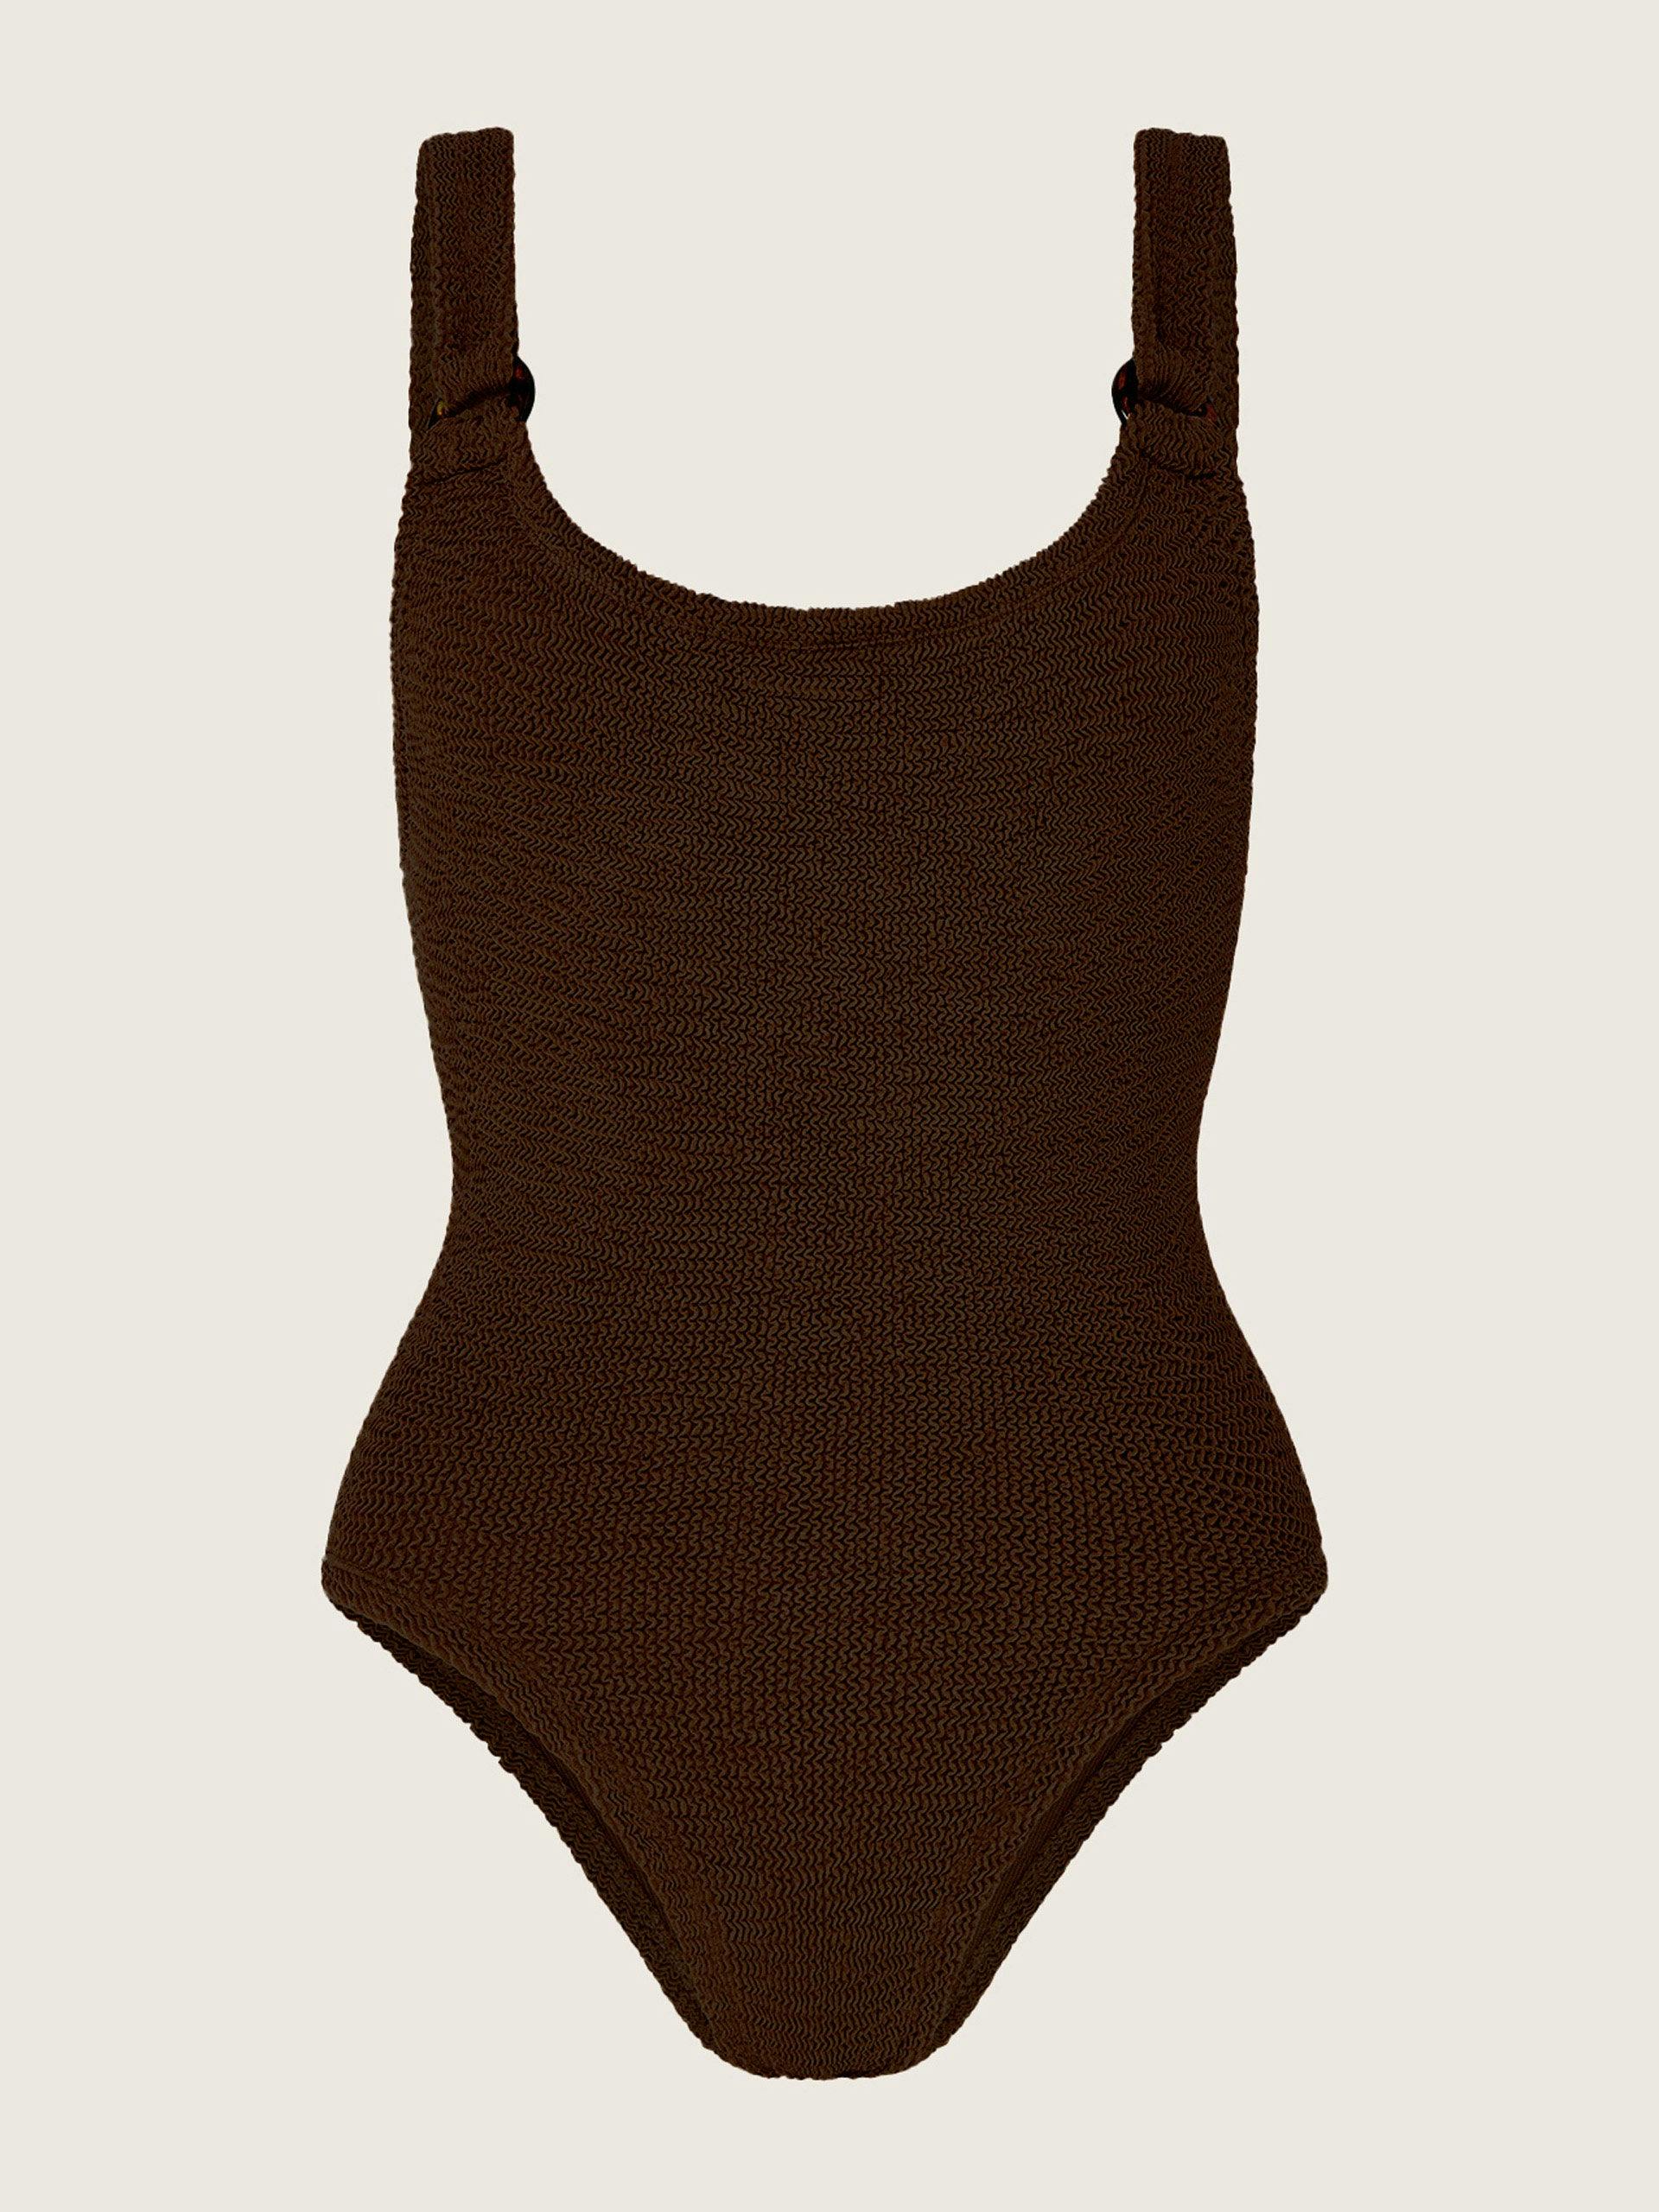 Metallic chocolate Domino scoop swimsuit